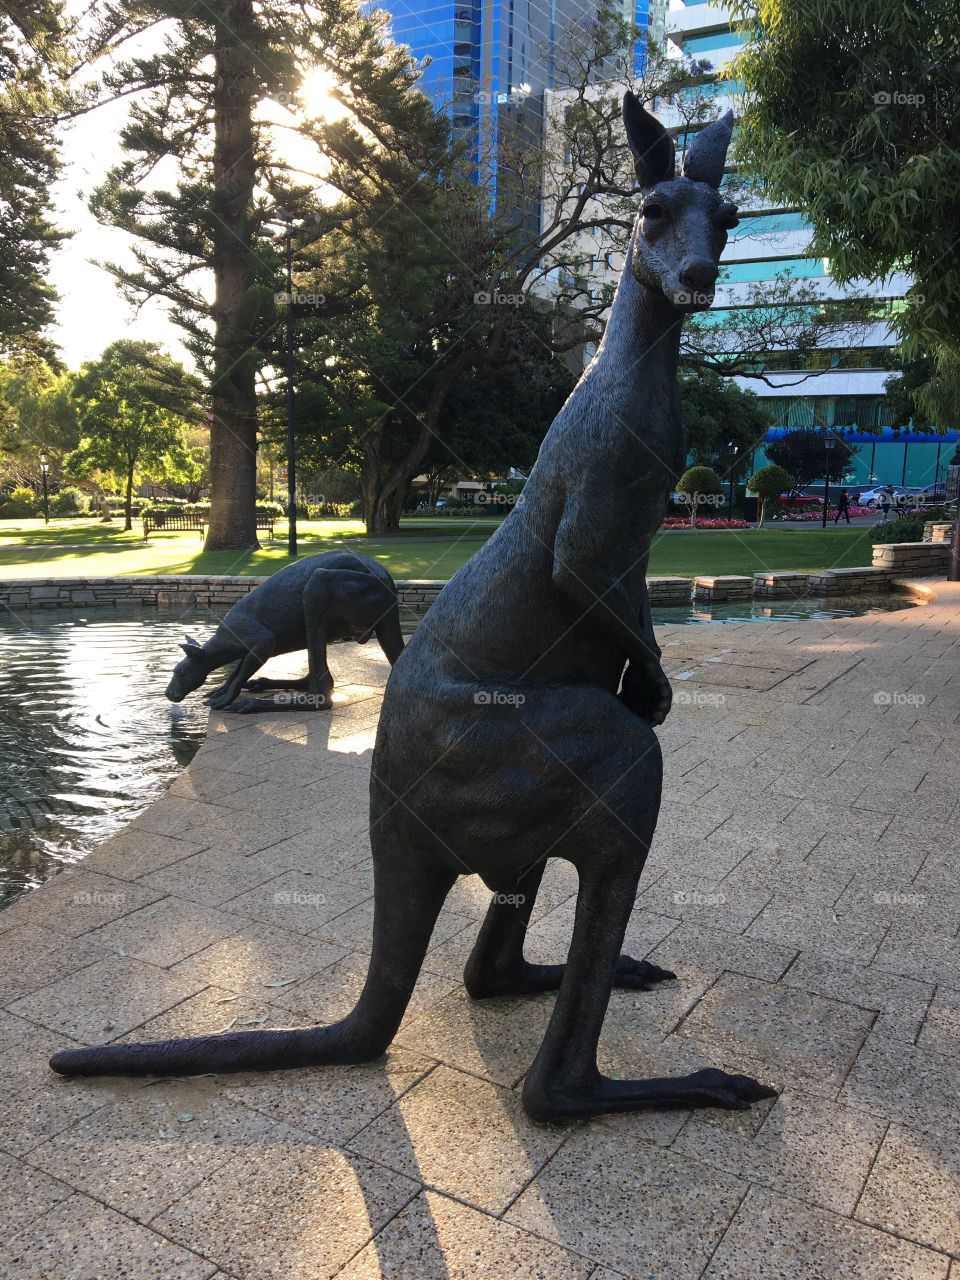 Two Statues of Kangaroo in Perth City, Western Australia.